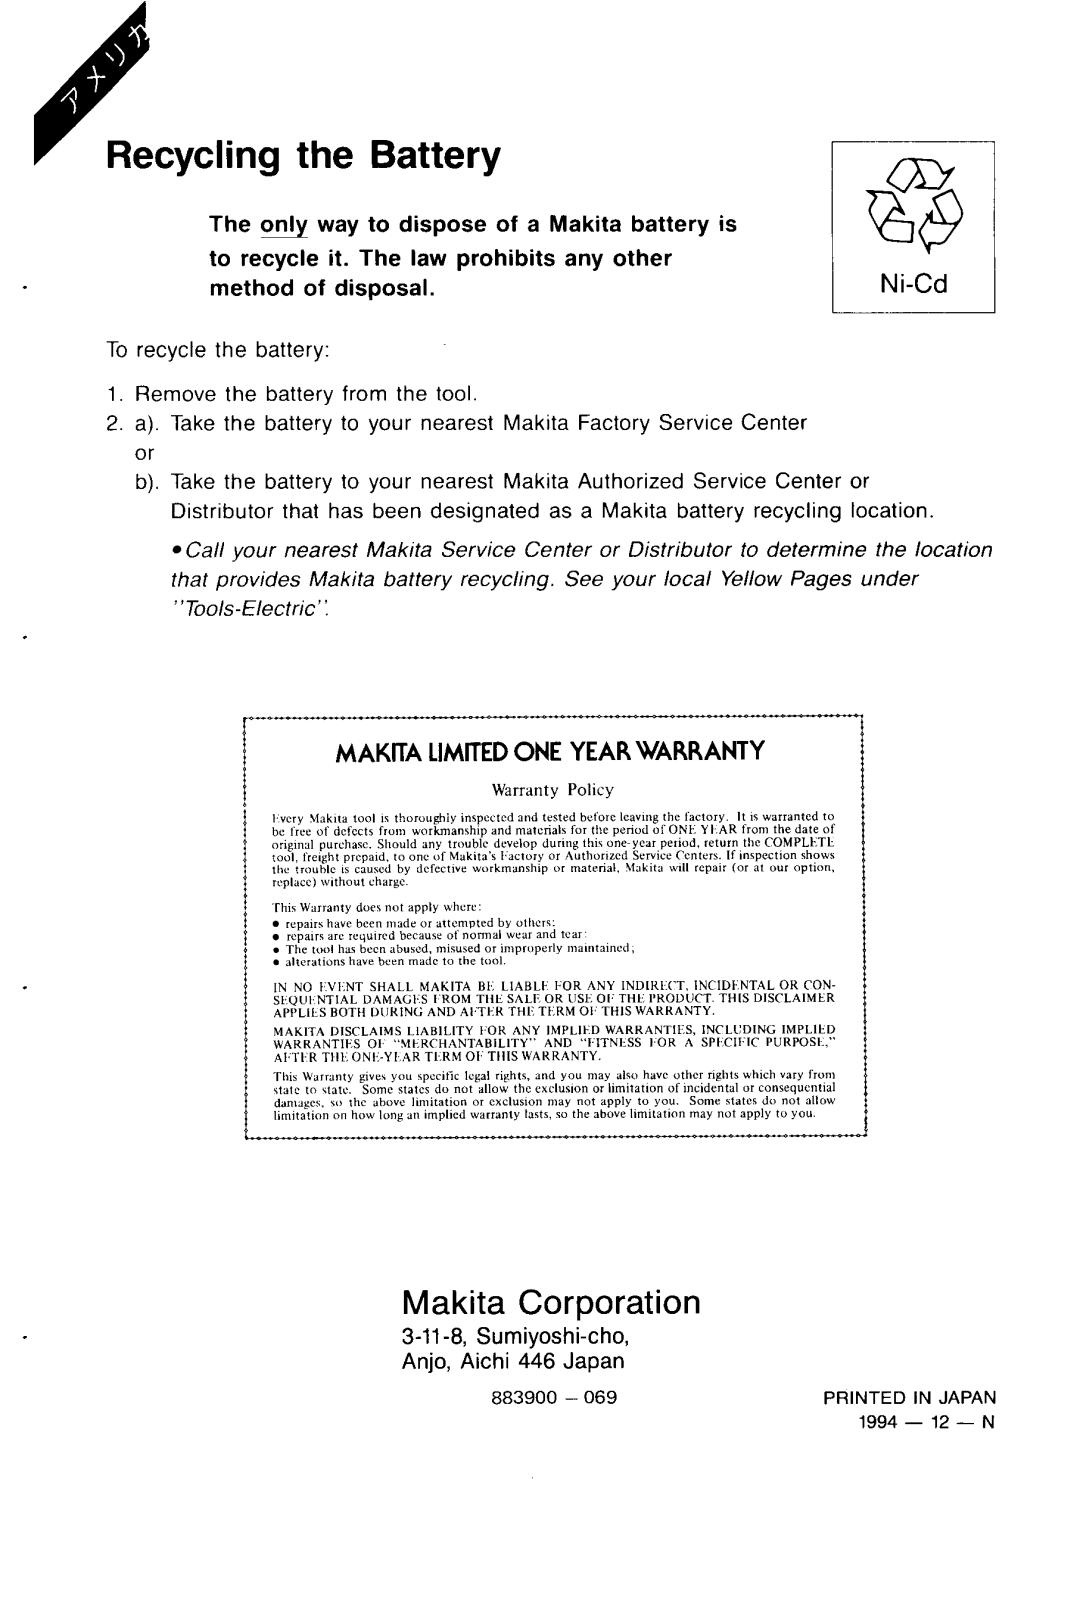 Makita HRIGODH Makita Corporation, The only way to dispose of a Makita battery is, method of disposal, Ni-Cd 